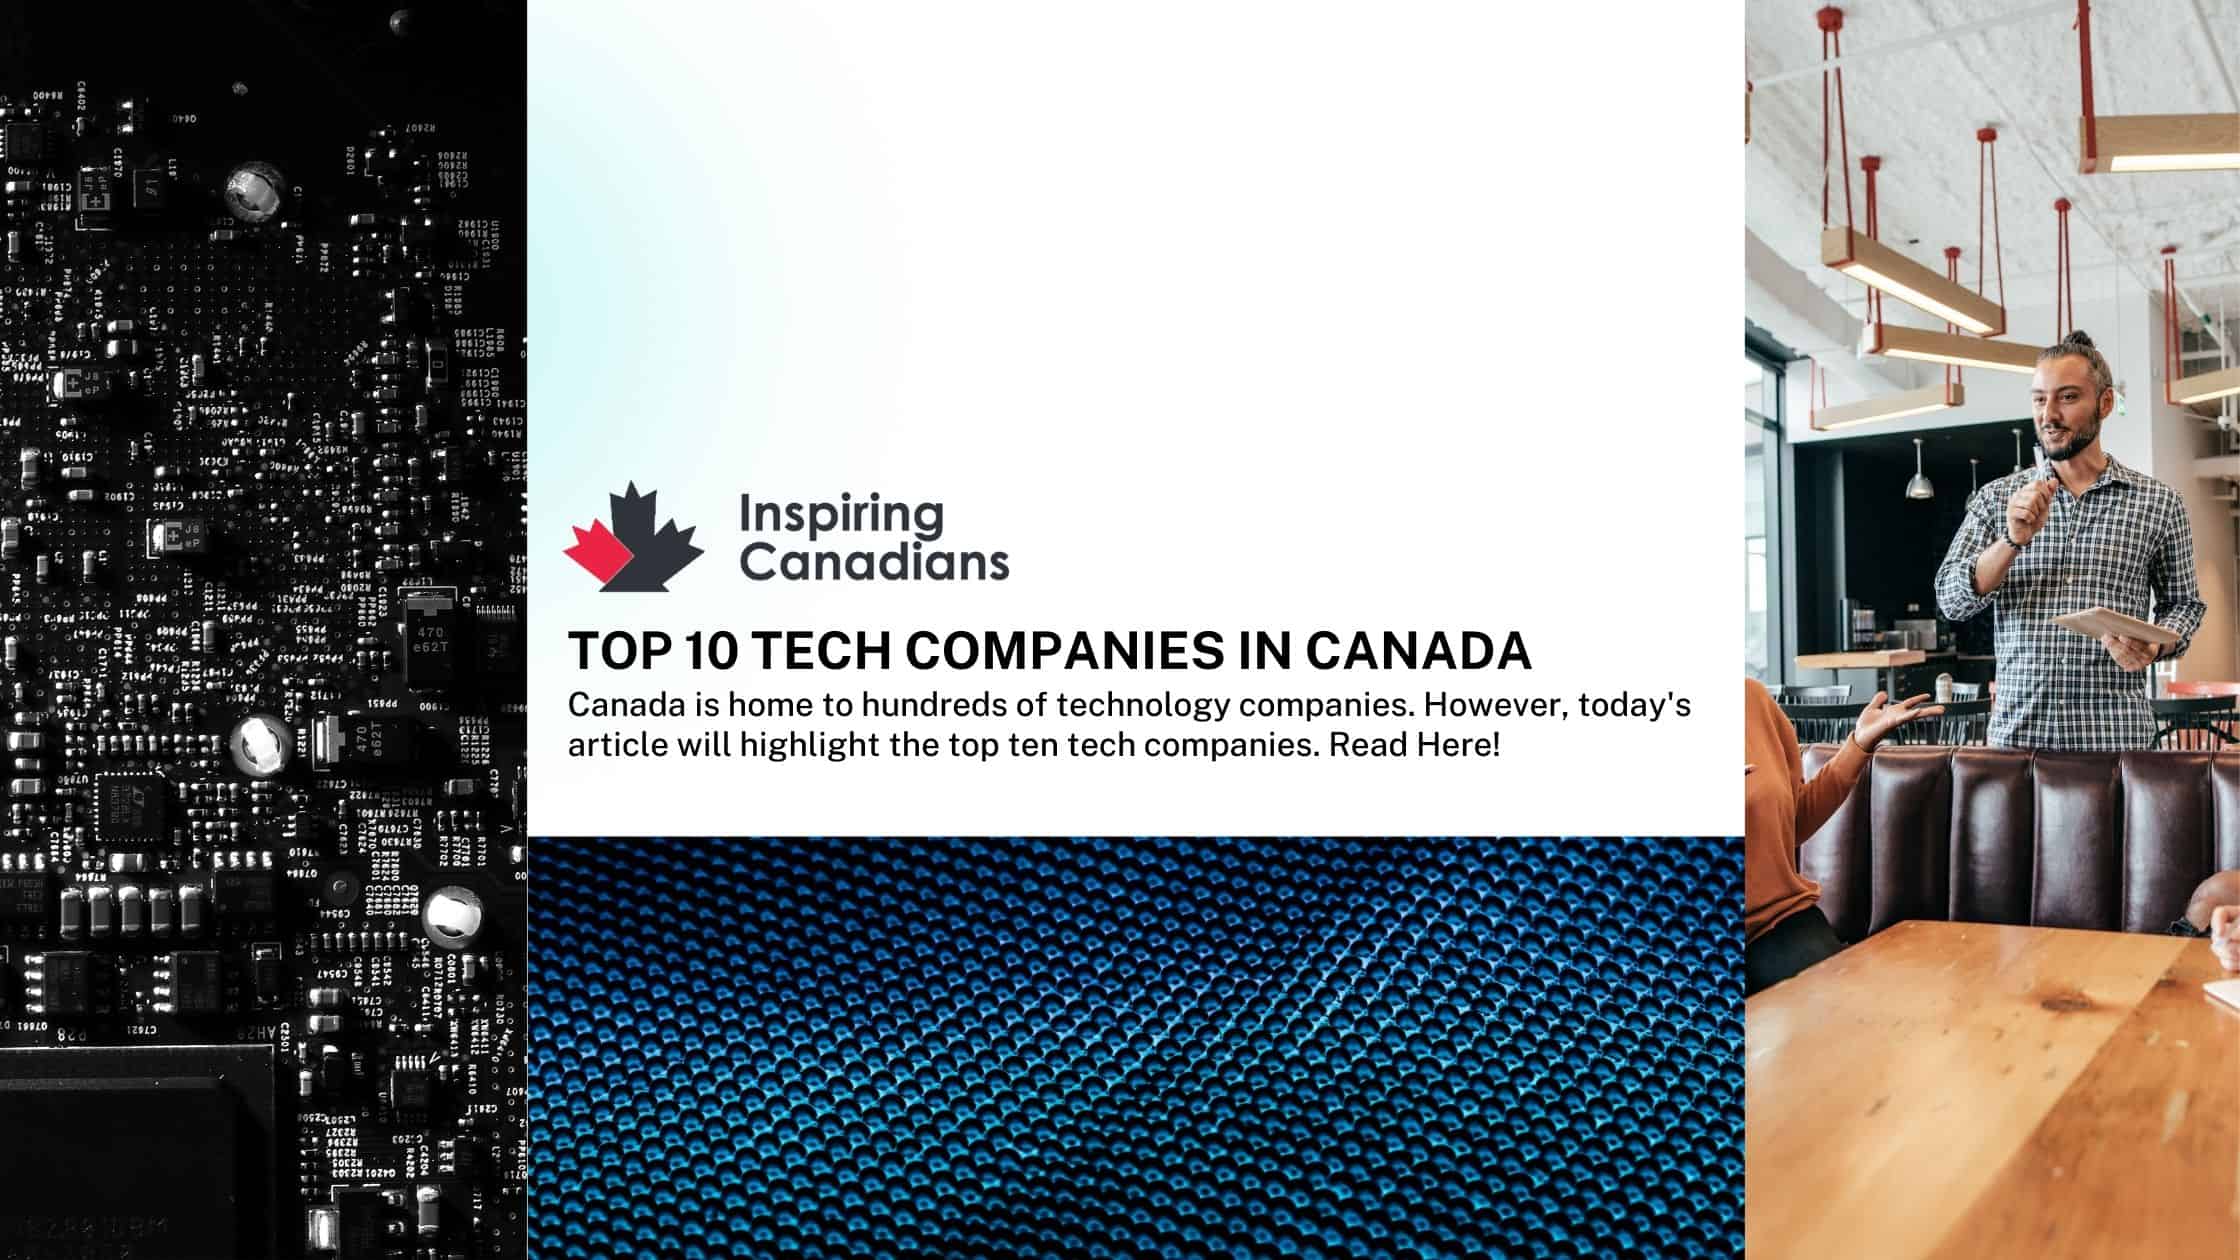 Top 10 tech companies in Canada